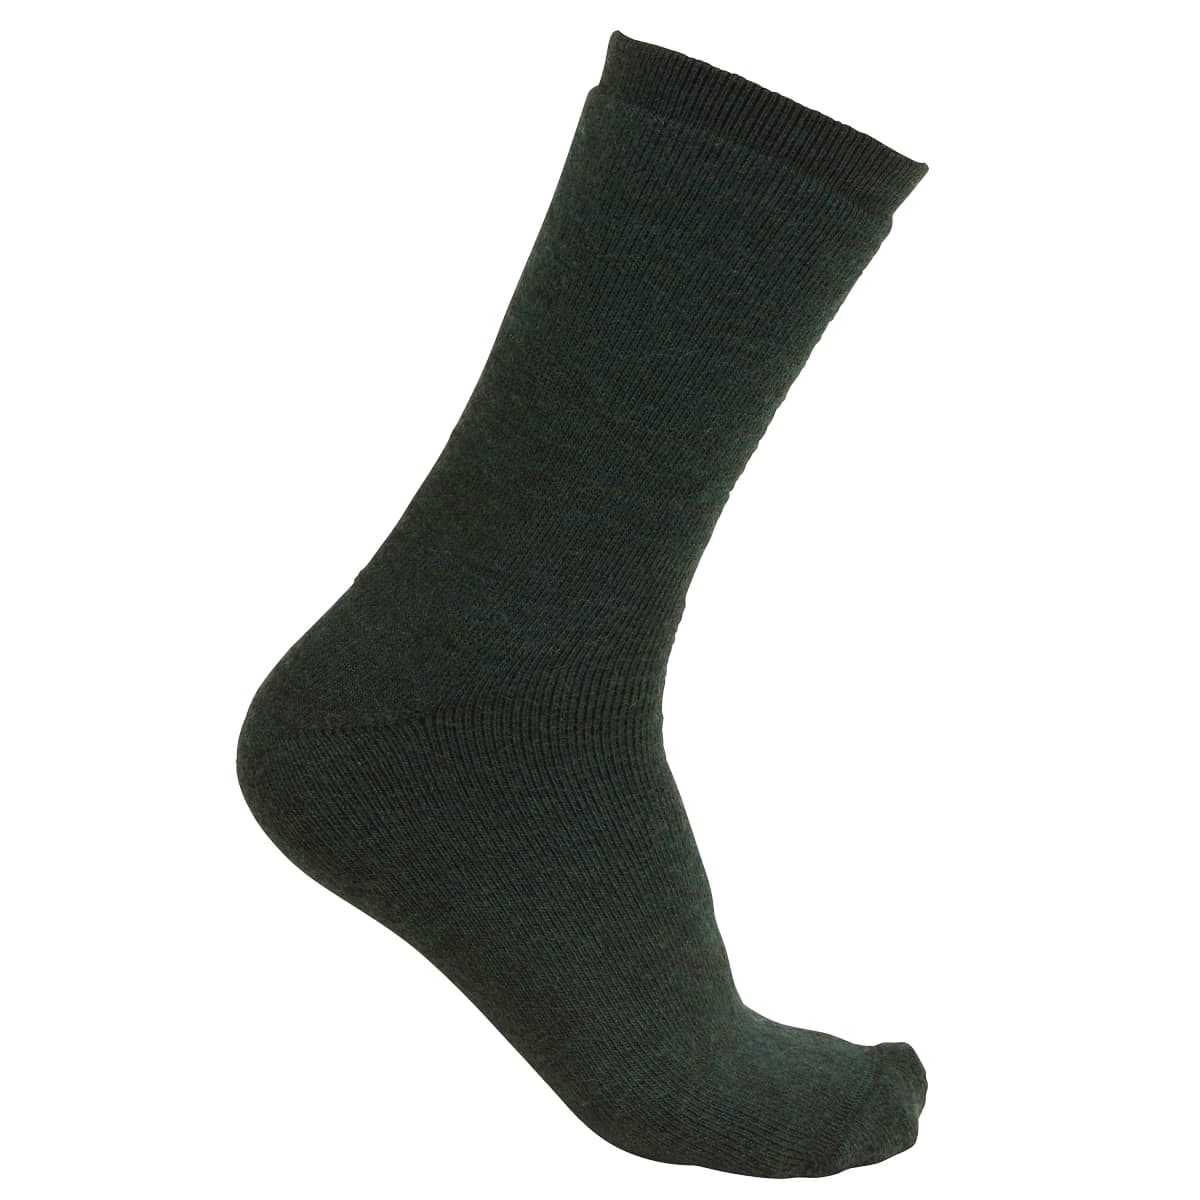 Woolpower Socks 200 - 400 - 600 g / m²